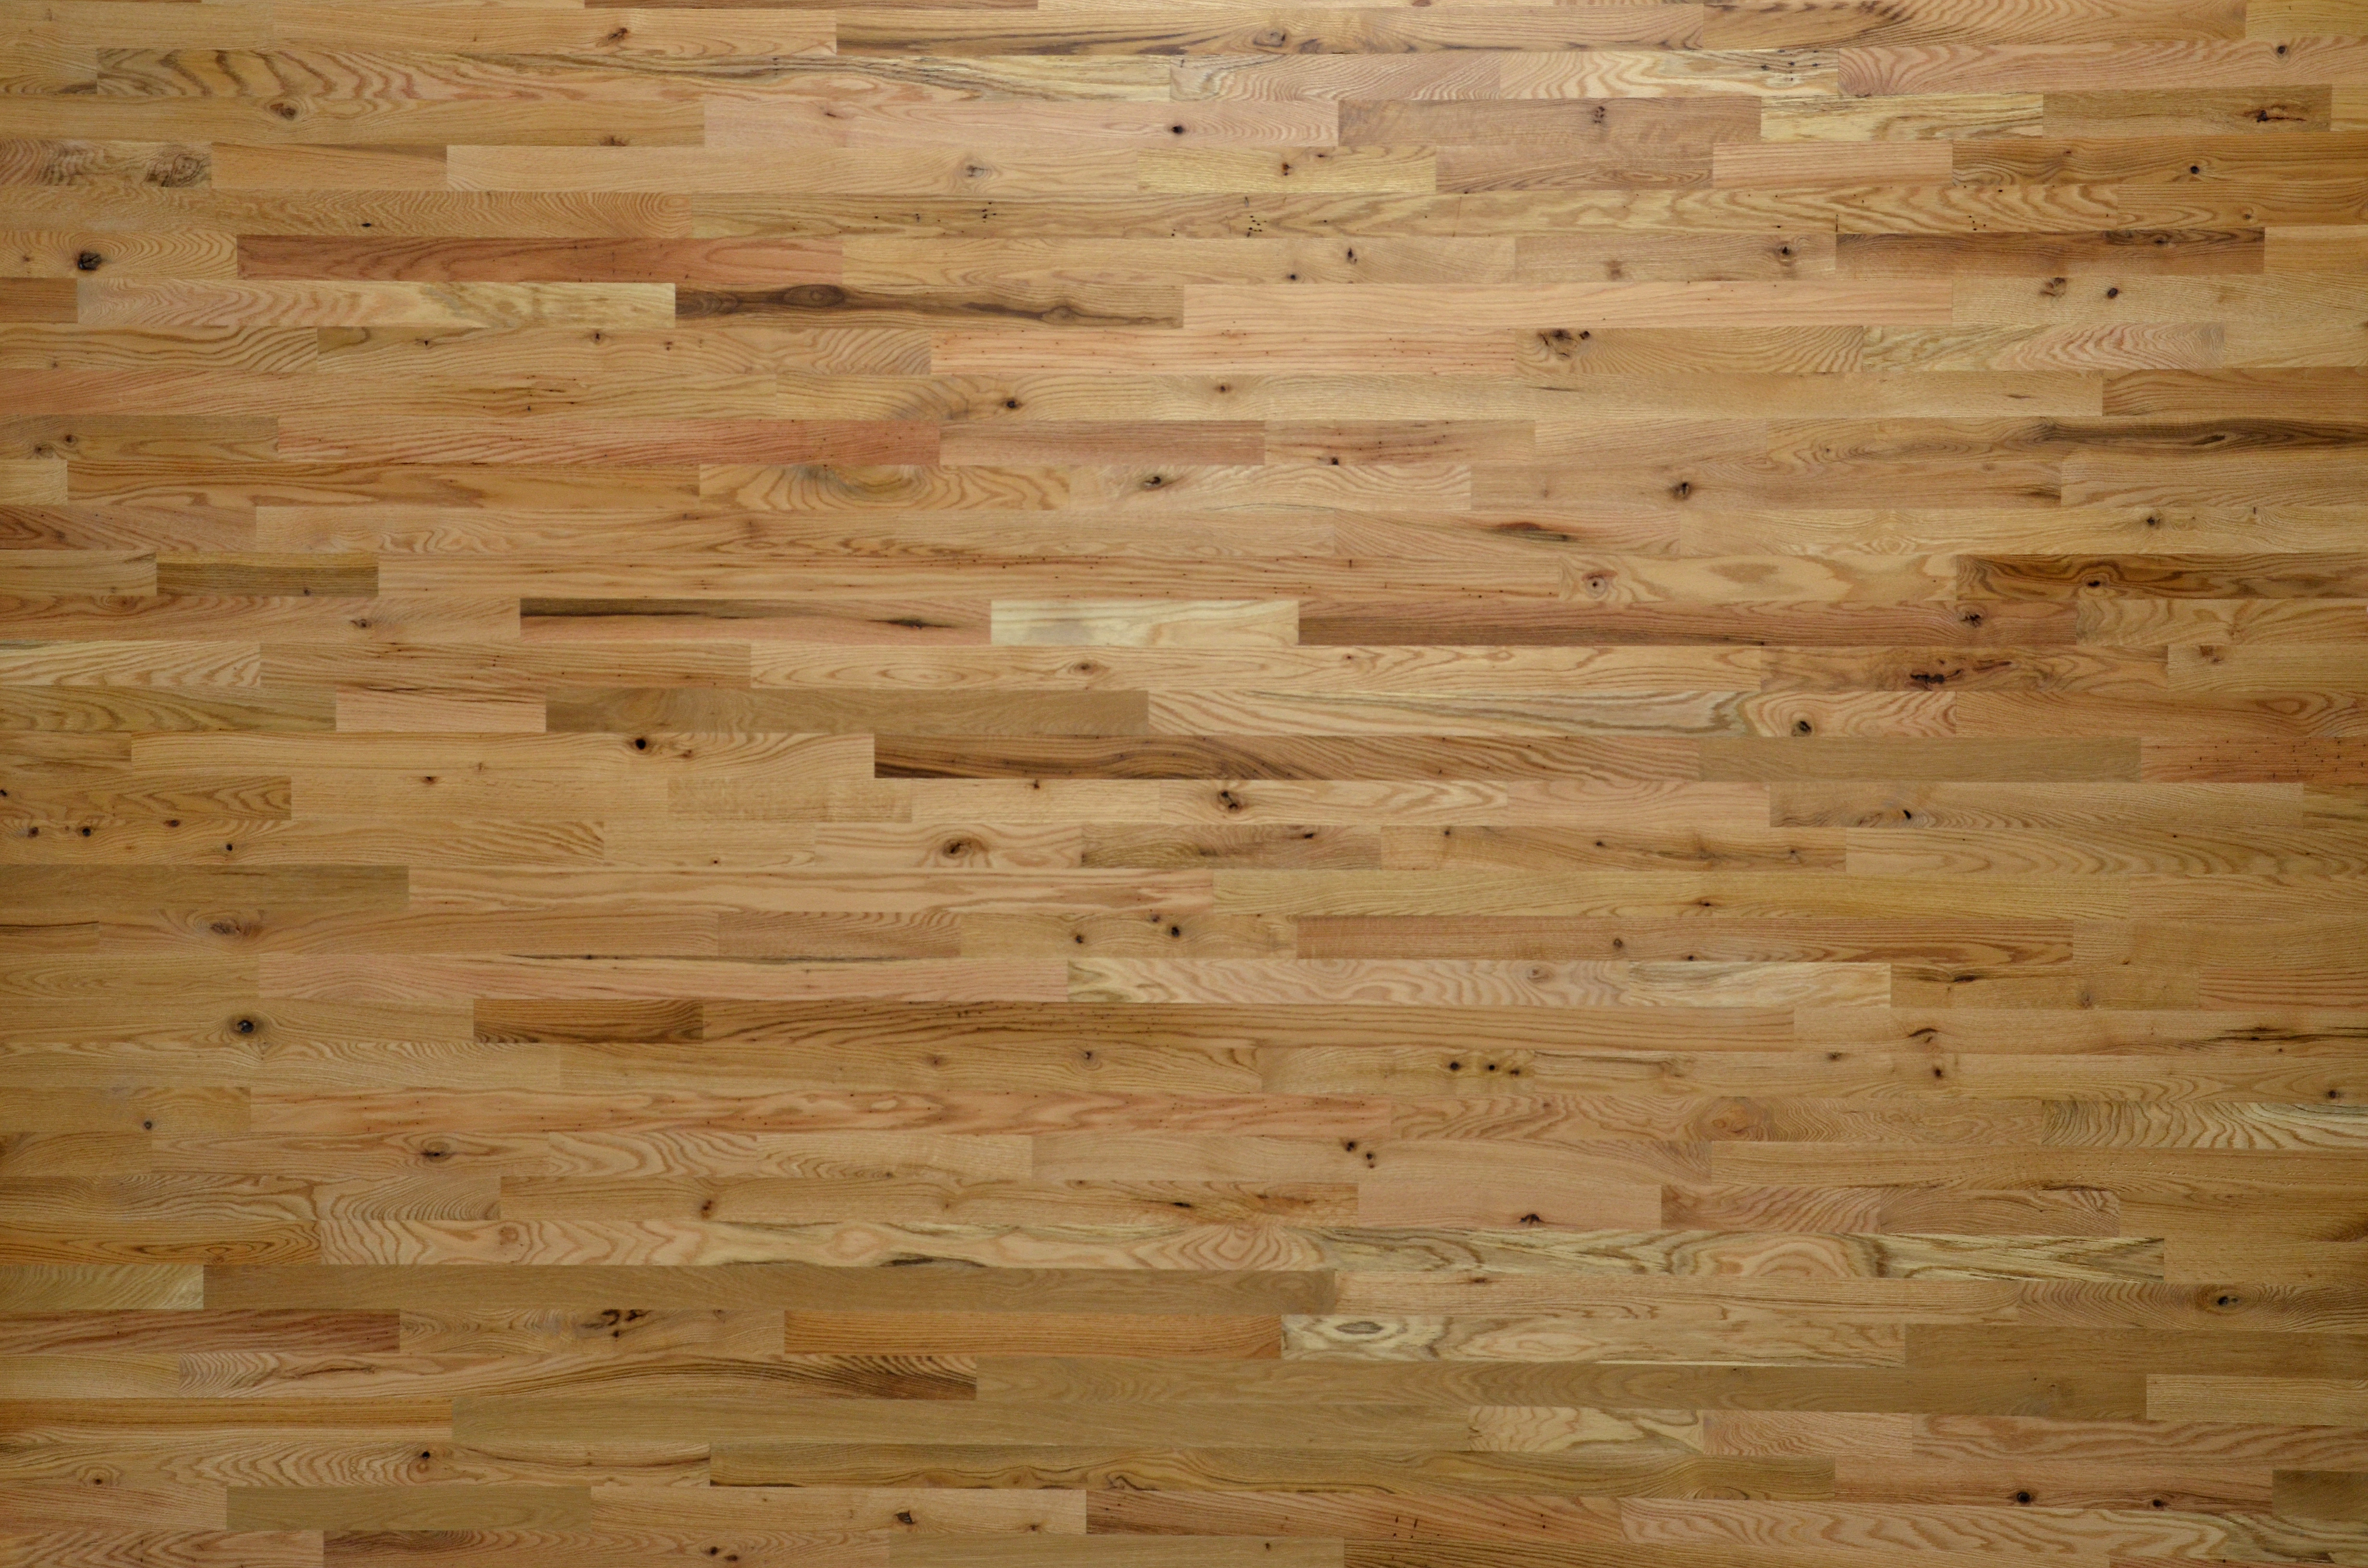 Discount Hardwood Flooring Illinois Of Lacrosse Hardwood Flooring Walnut White Oak Red Oak Hickory Regarding 2 Common Red Oak